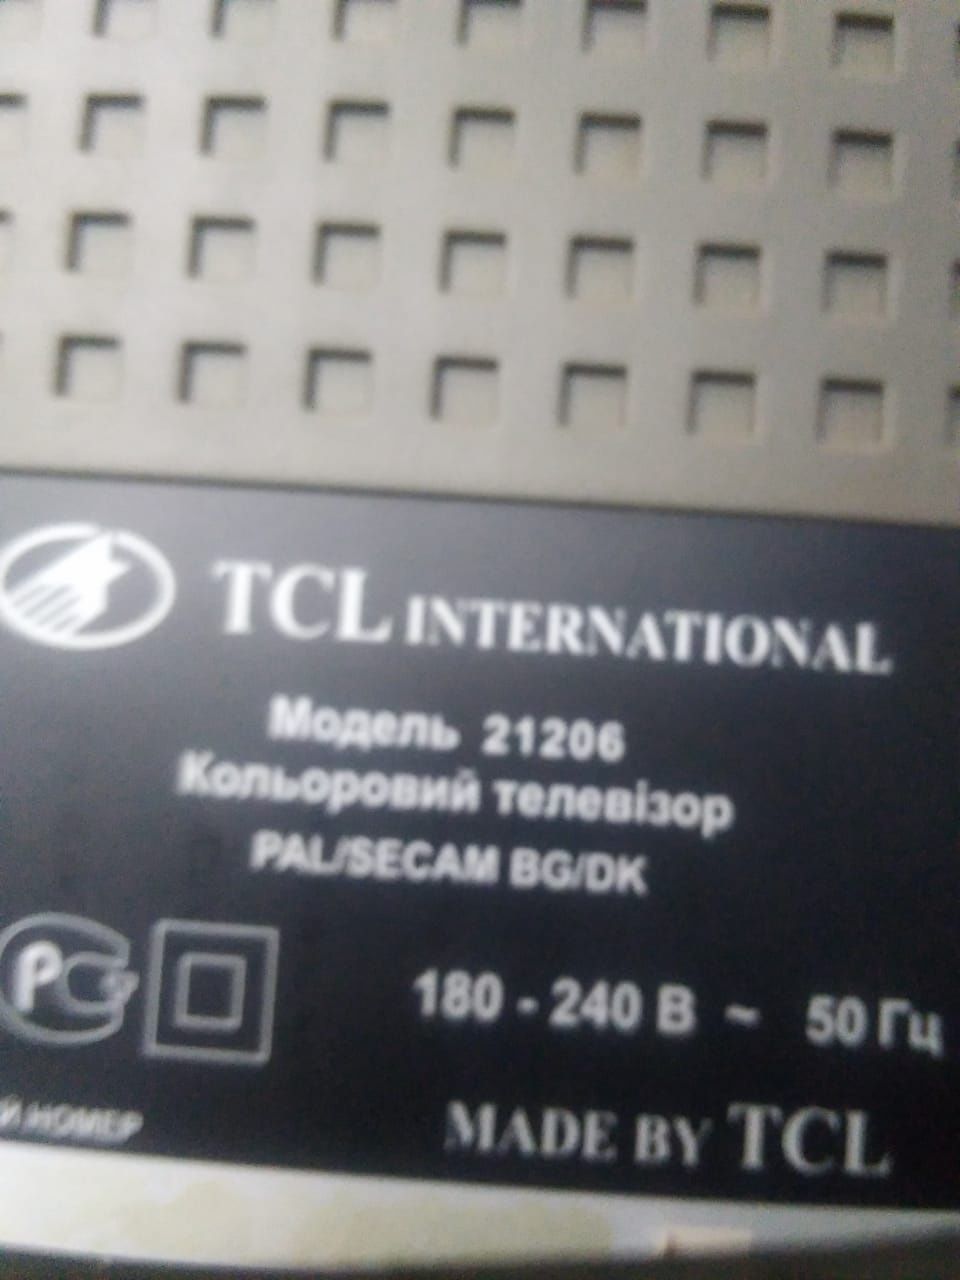 TCL Internetional 21206